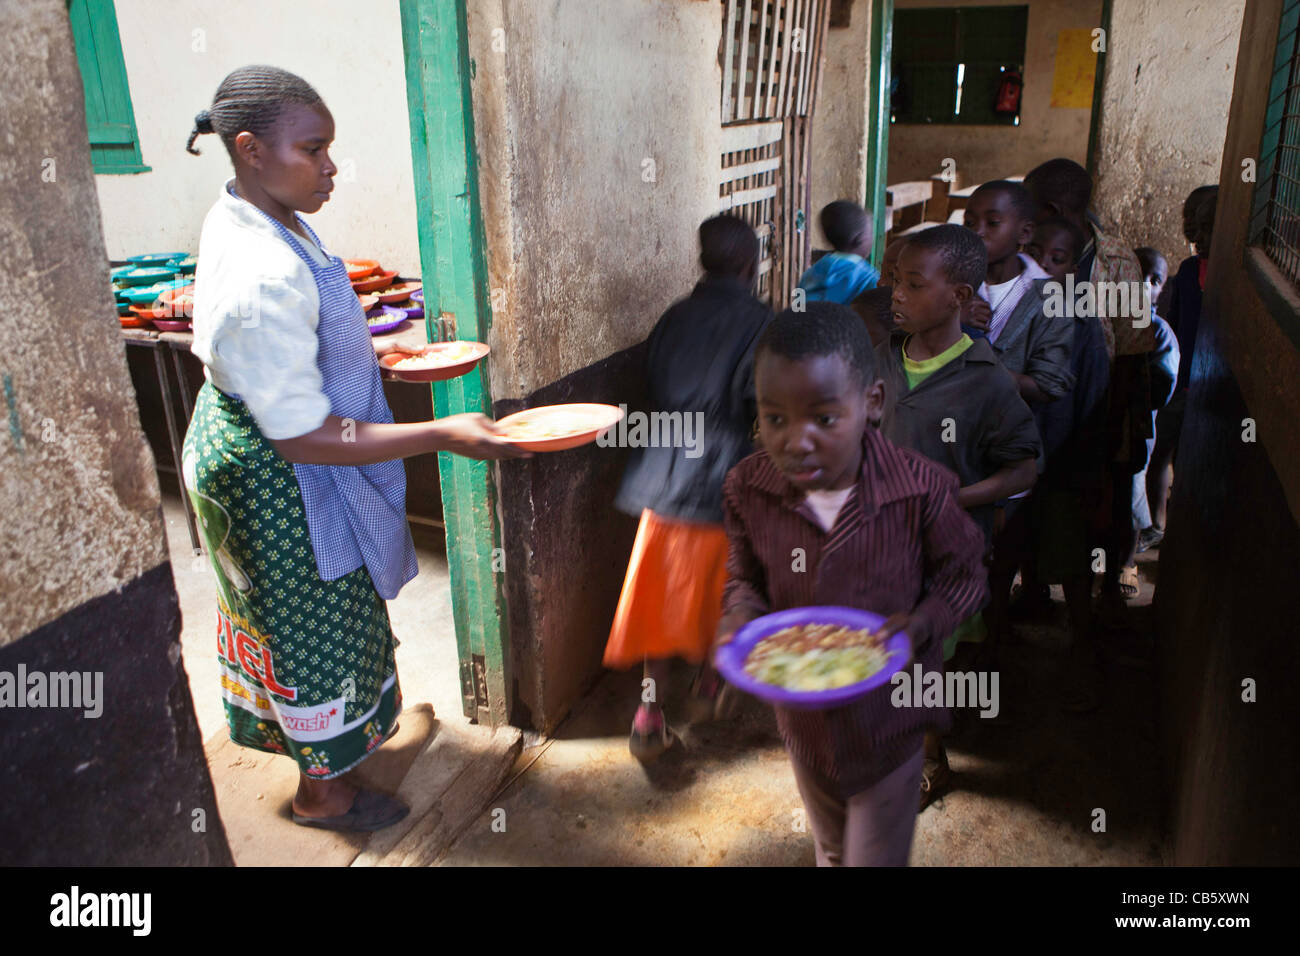 School children receive freshly cooked food at Kibera School, Nairobi where an NGO runs a lunchtime feeding program. Stock Photo